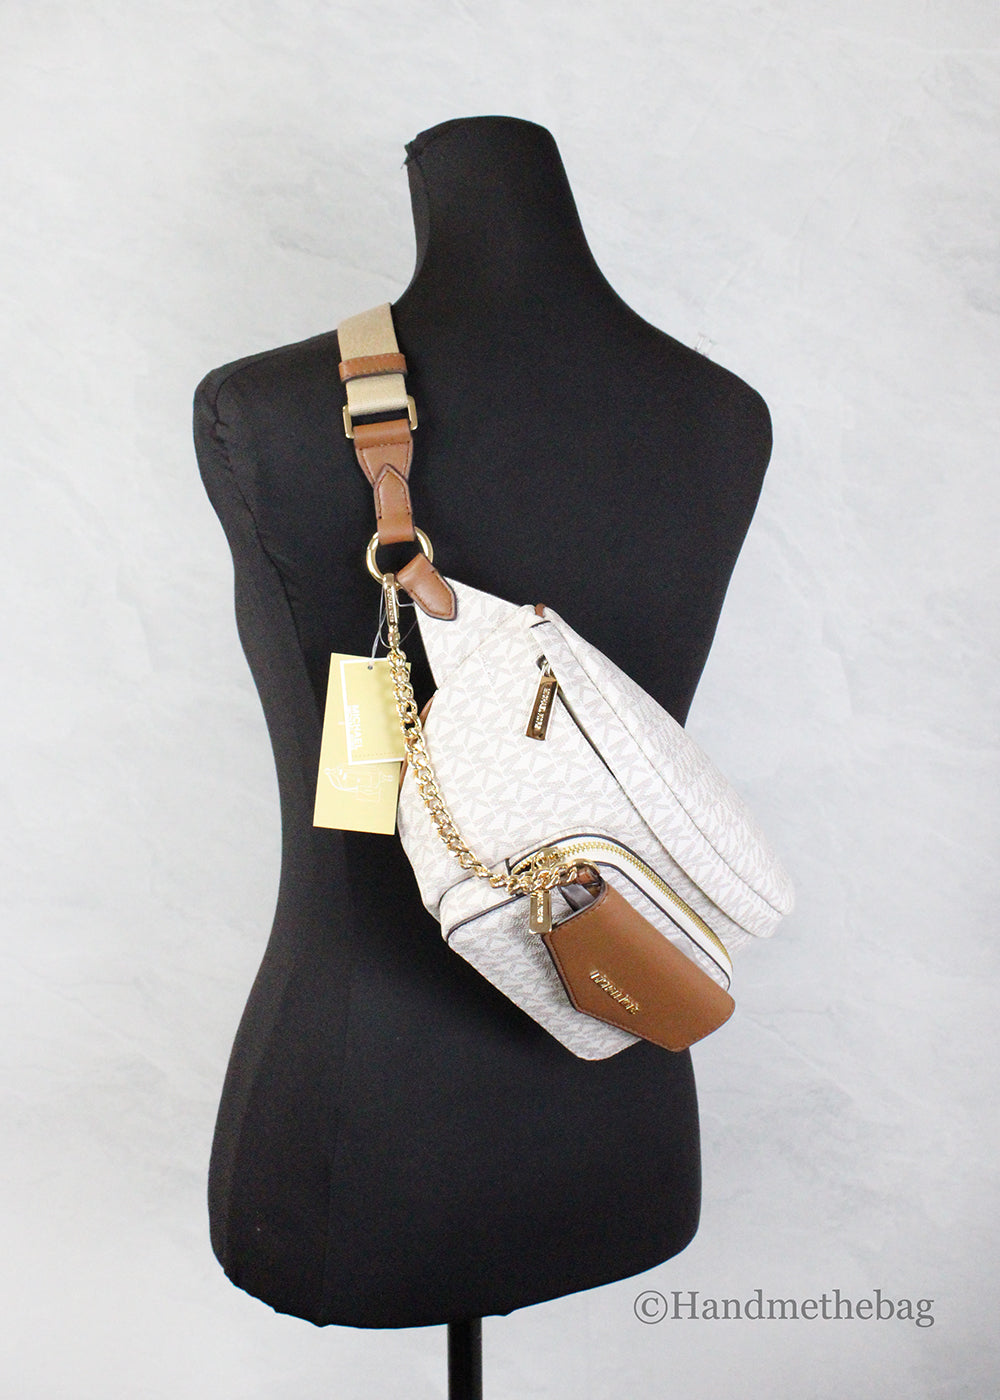 Michael Kors Maisie Large Vanilla PVC 2-n-1 Belt Bag